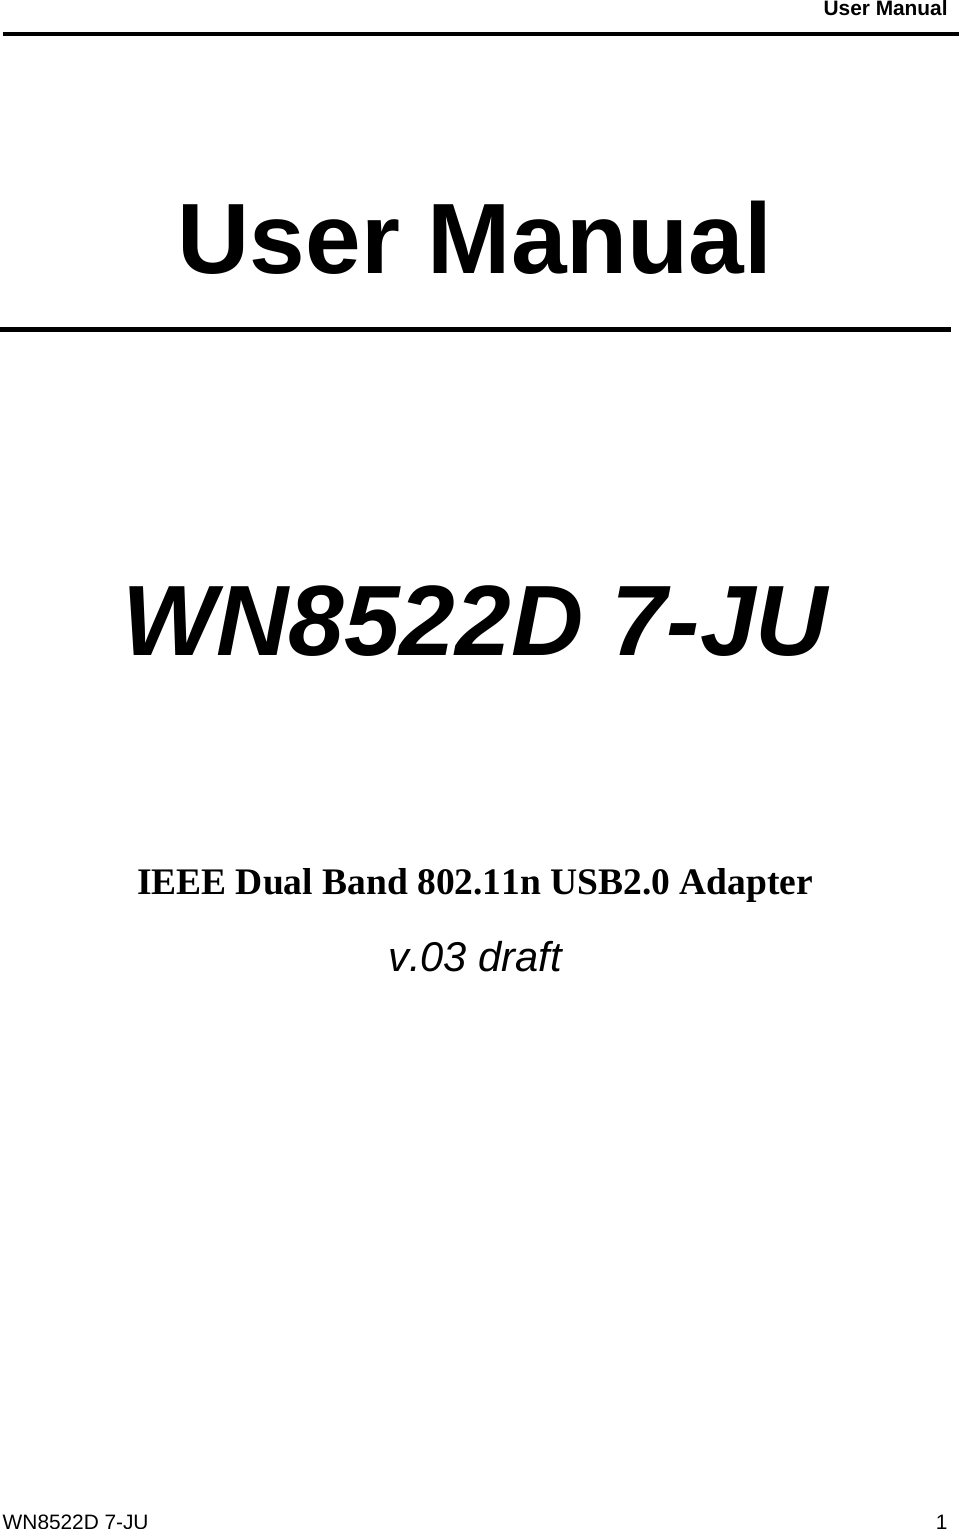                                           User Manual                                              WN8522D 7-JU  1 User Manual   WN8522D 7-JU     IEEE Dual Band 802.11n USB2.0 Adapter v.03 draft    